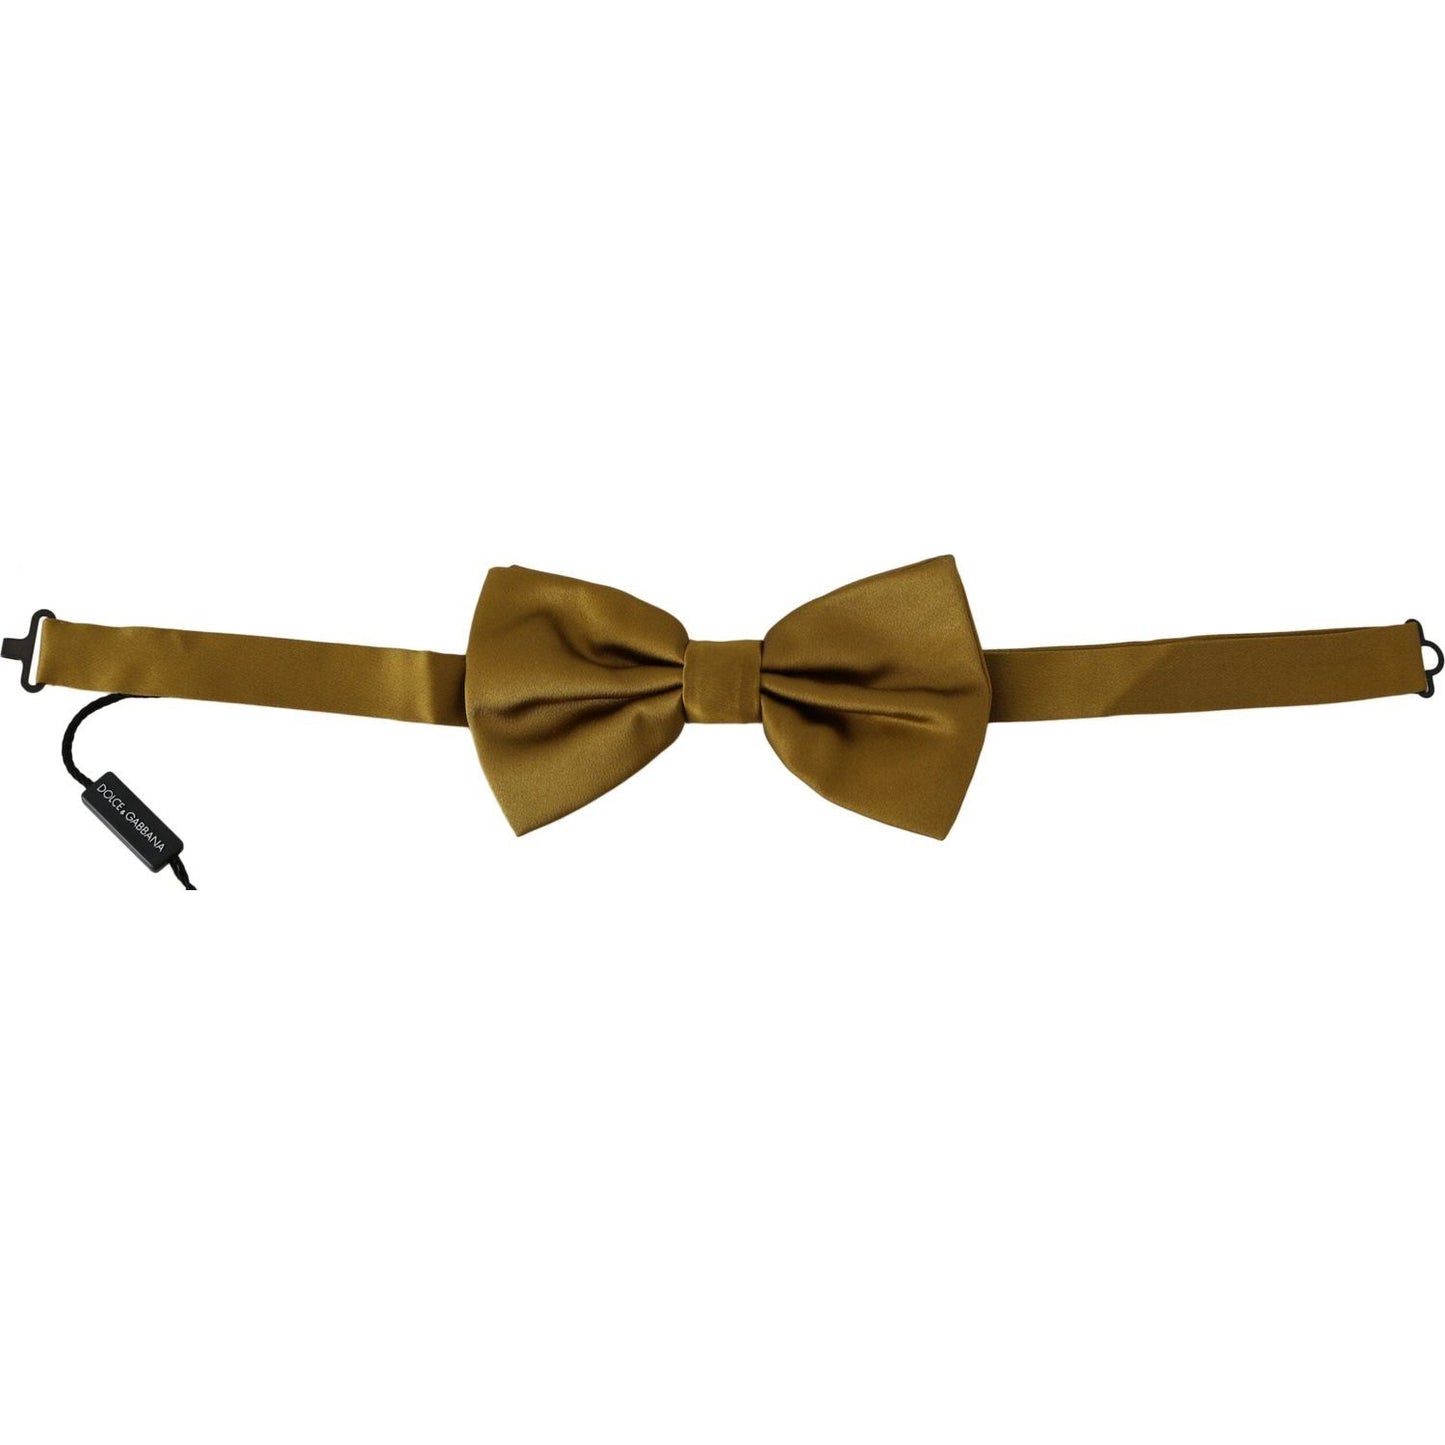 Dolce & Gabbana Elegant Mustard Silk Bow Tie yellow-mustard-100-silk-butterfly-papillon-men-bow-tie Bow Tie IMG_4284-scaled.jpg